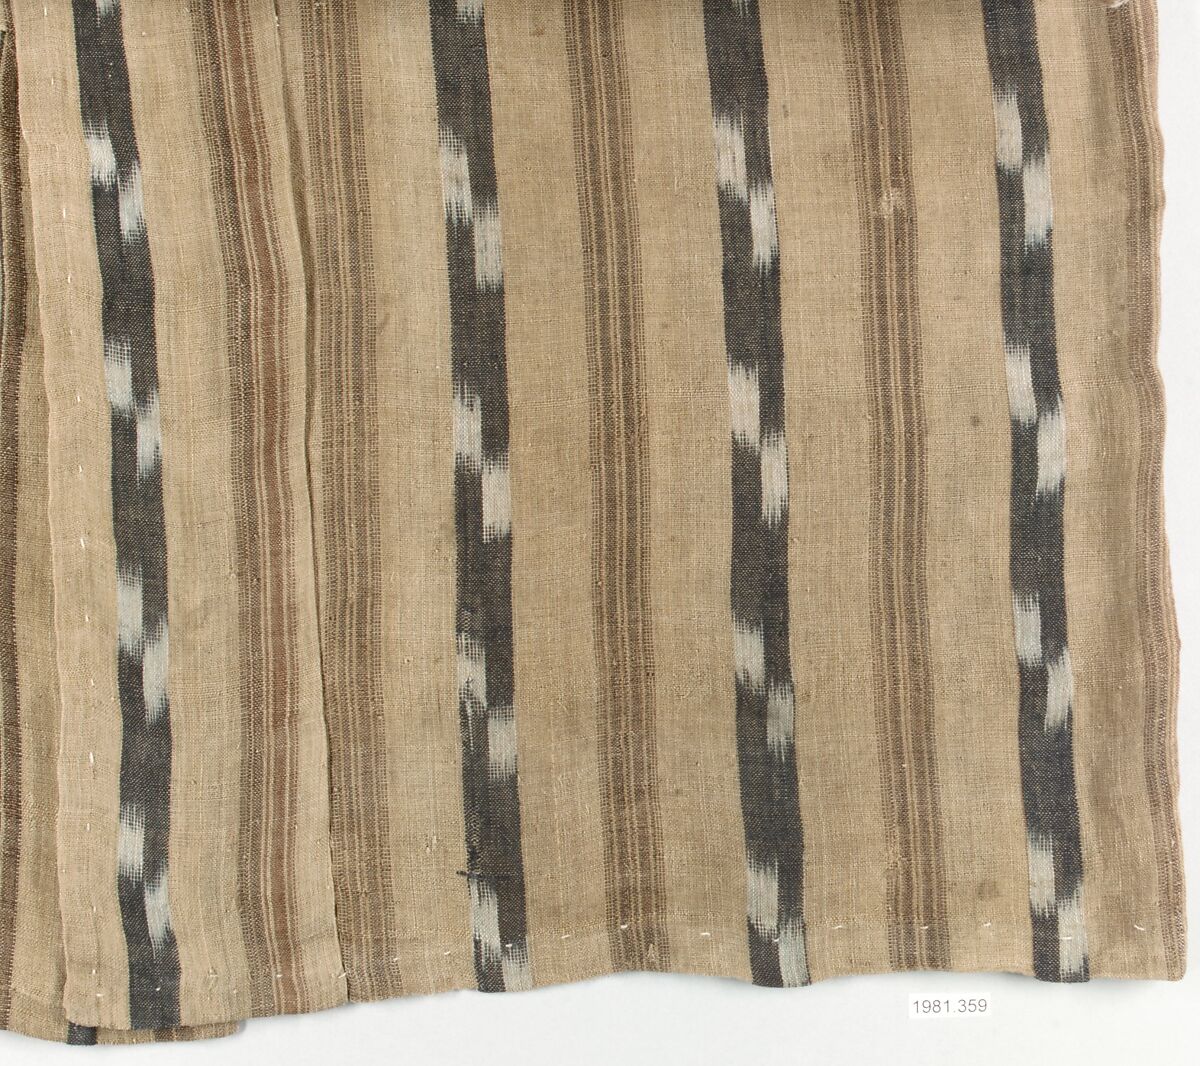 Child's Robe, Banana fiber (basho), cotton, Japan (Ryūkyū Islands) 